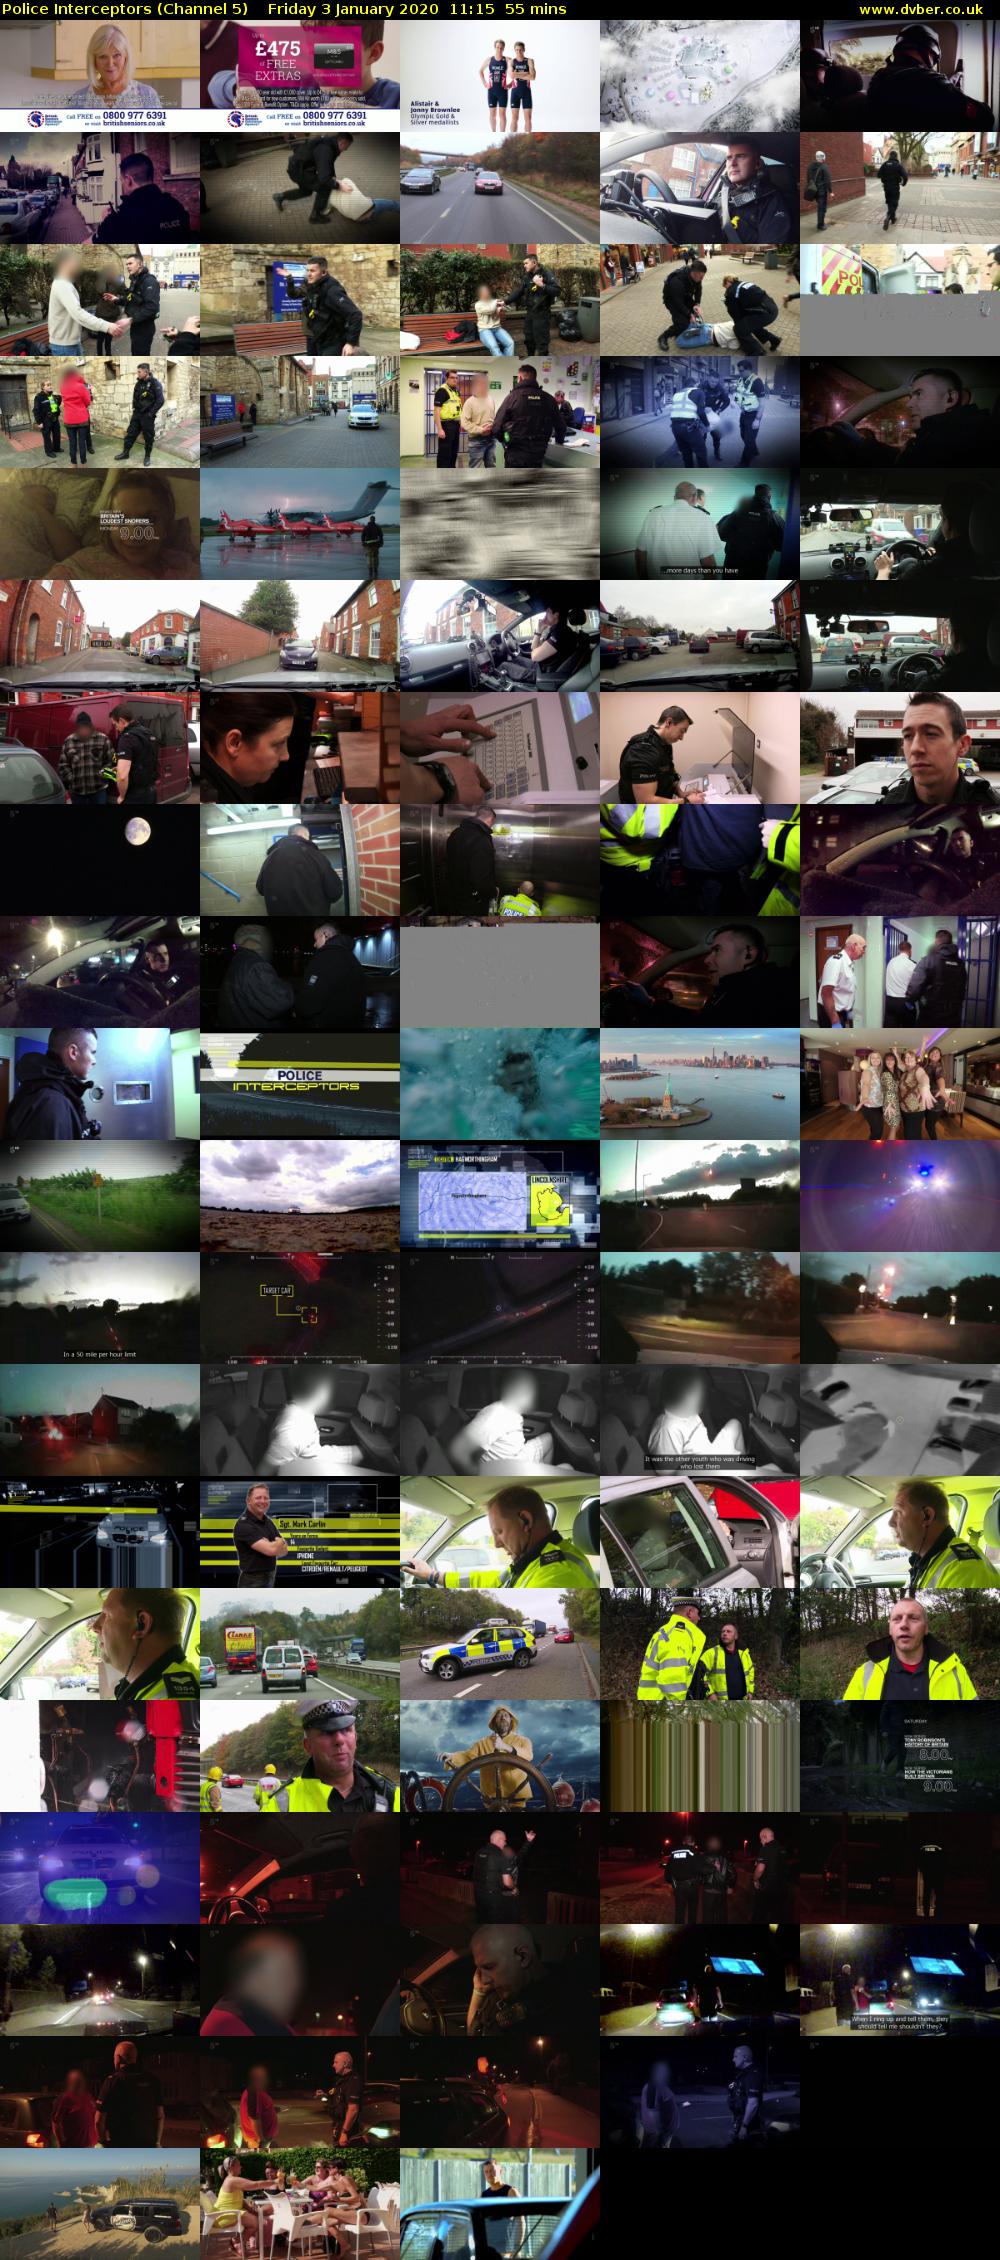 Police Interceptors (Channel 5) Friday 3 January 2020 11:15 - 12:10